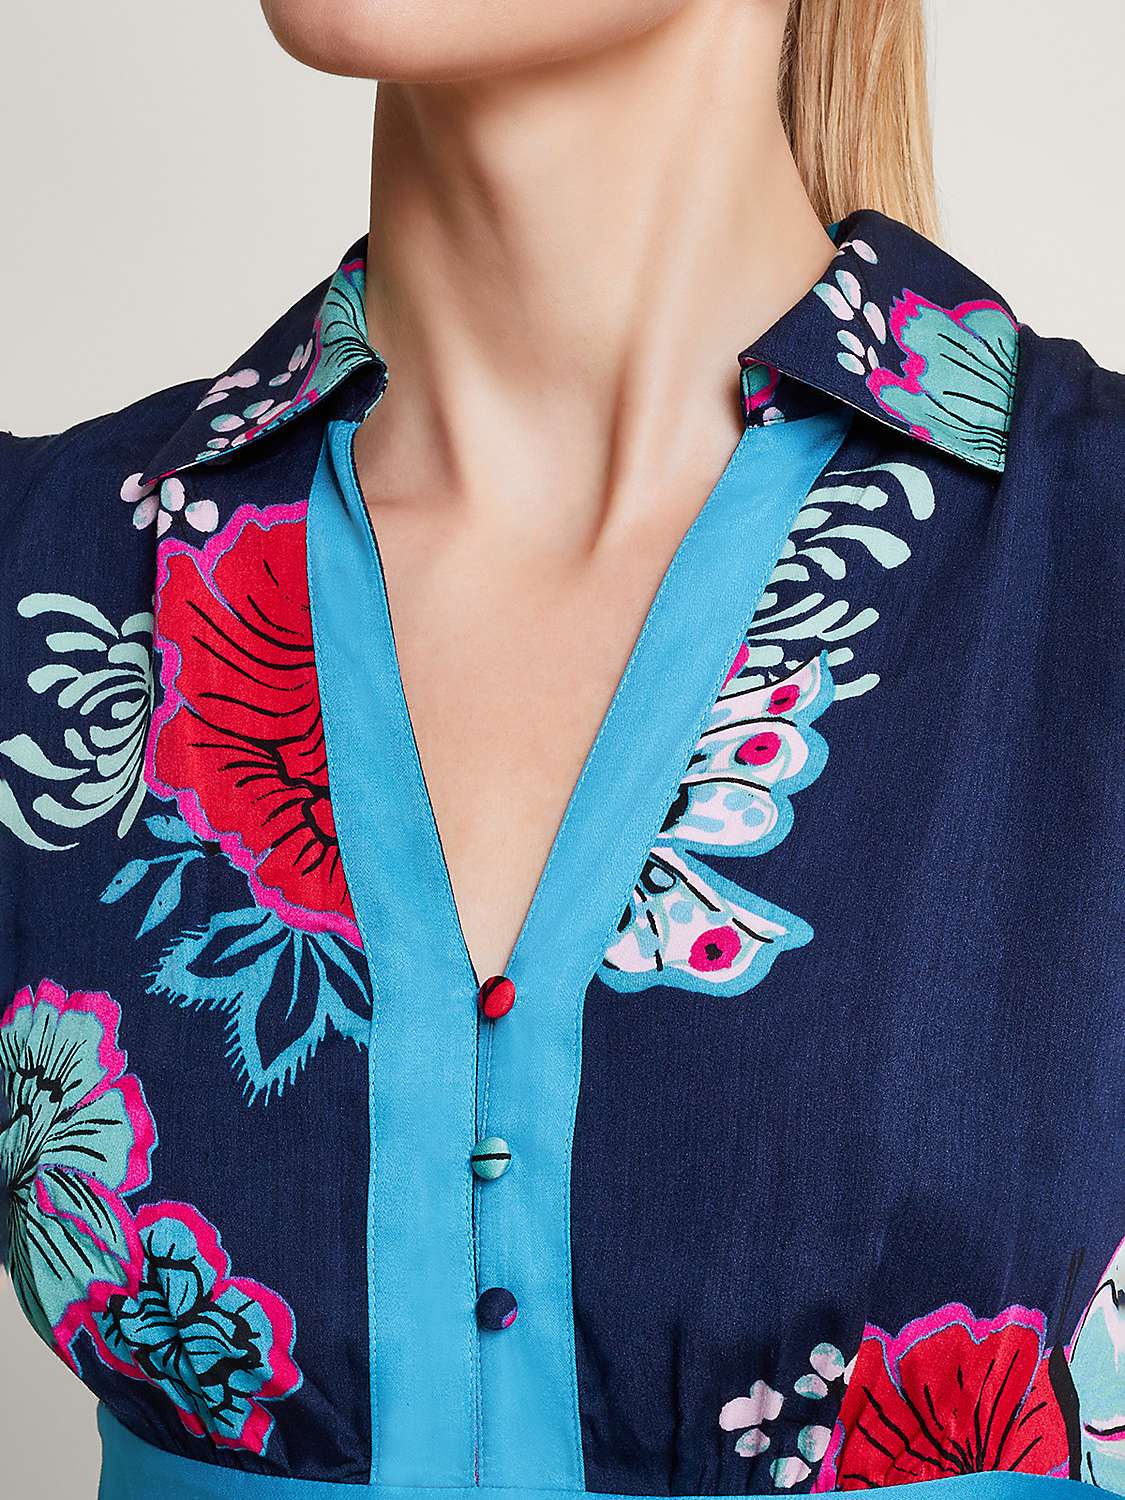 Buy Monsoon Esme Floral Shirt Dress, Navy/Multi Online at johnlewis.com